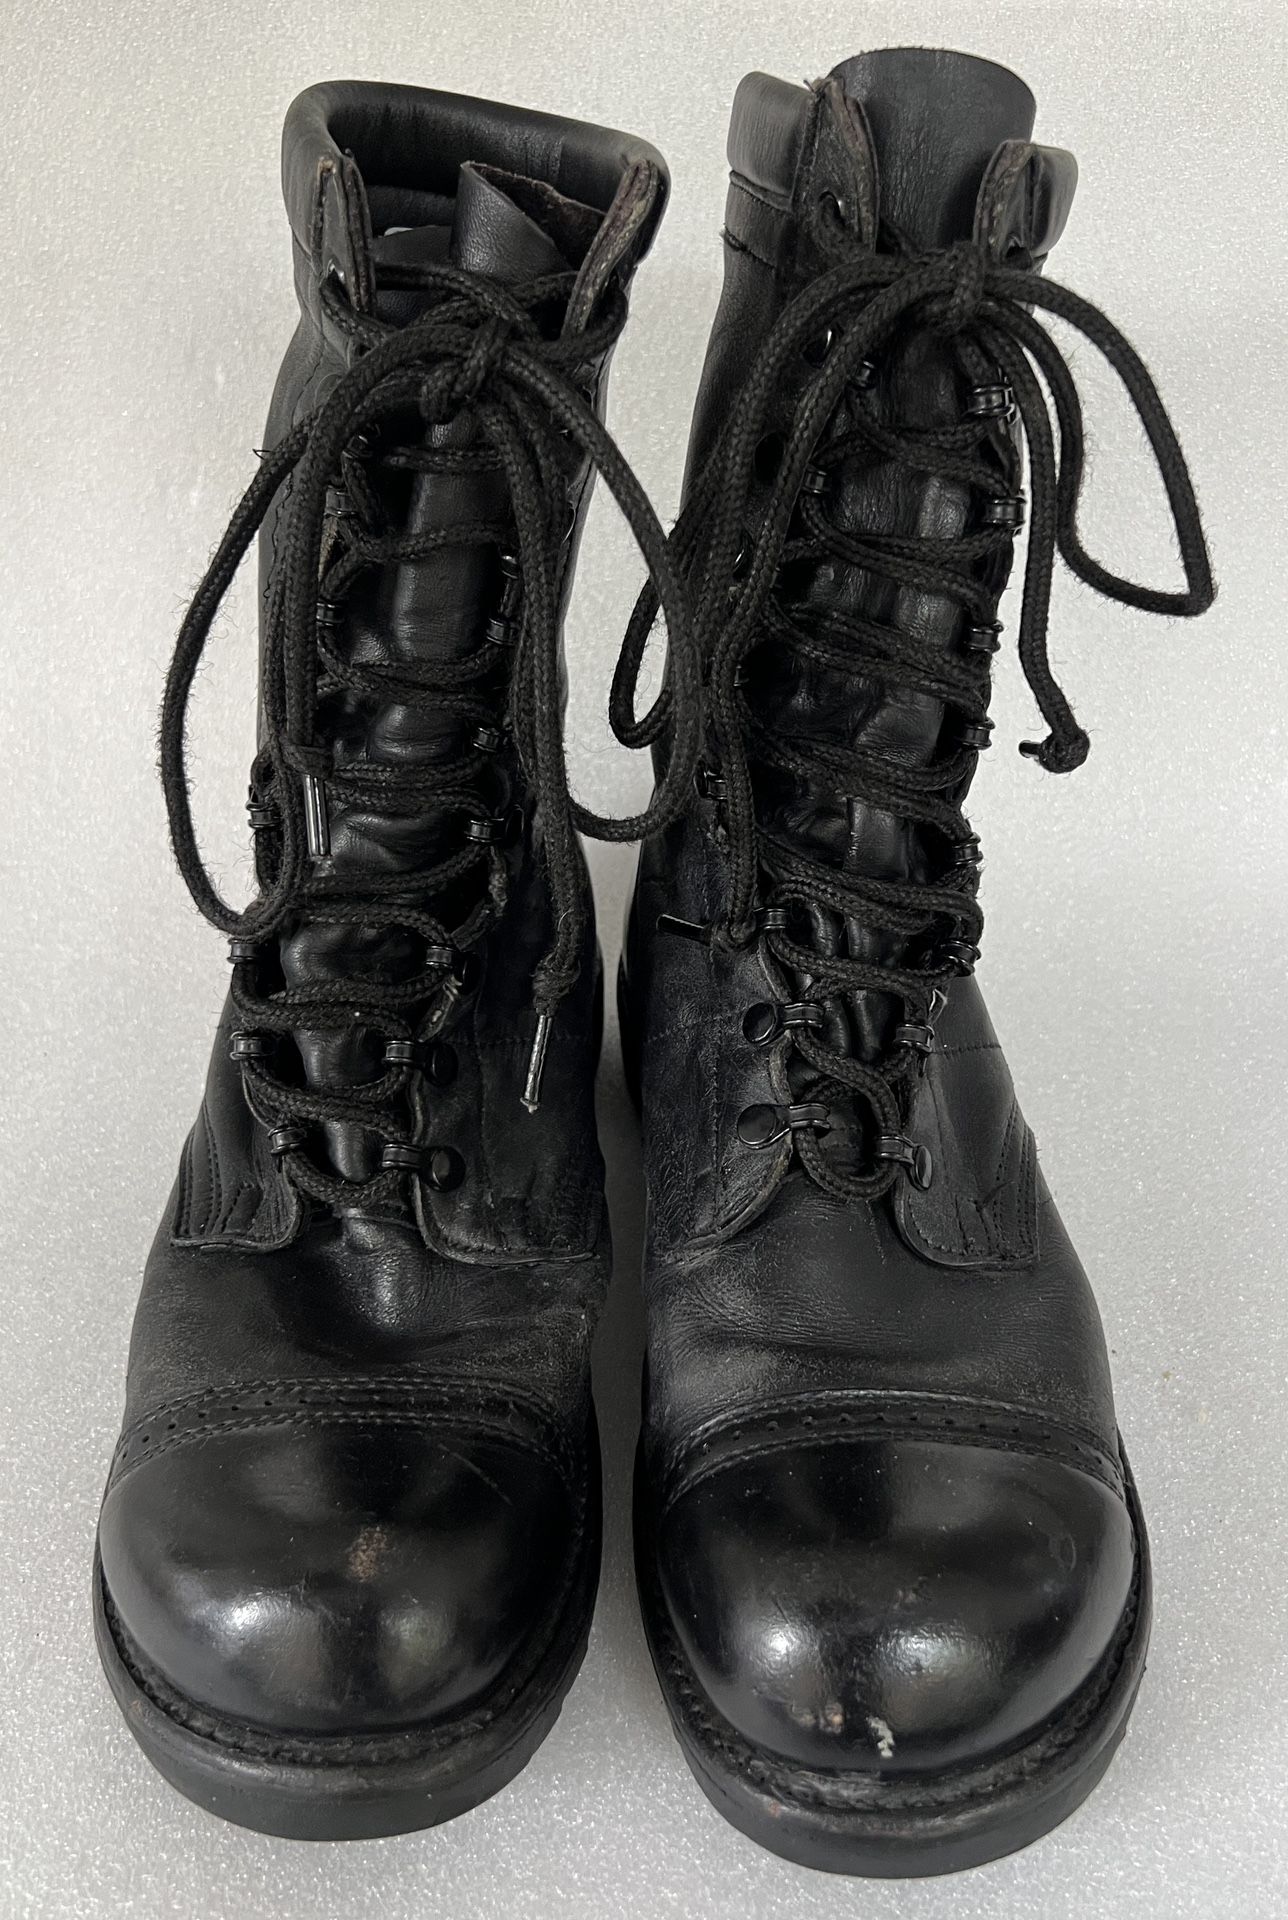 Men's Combat Work Boots Lace Up Steel Toe Black Leather Size 10.5 Vibram  